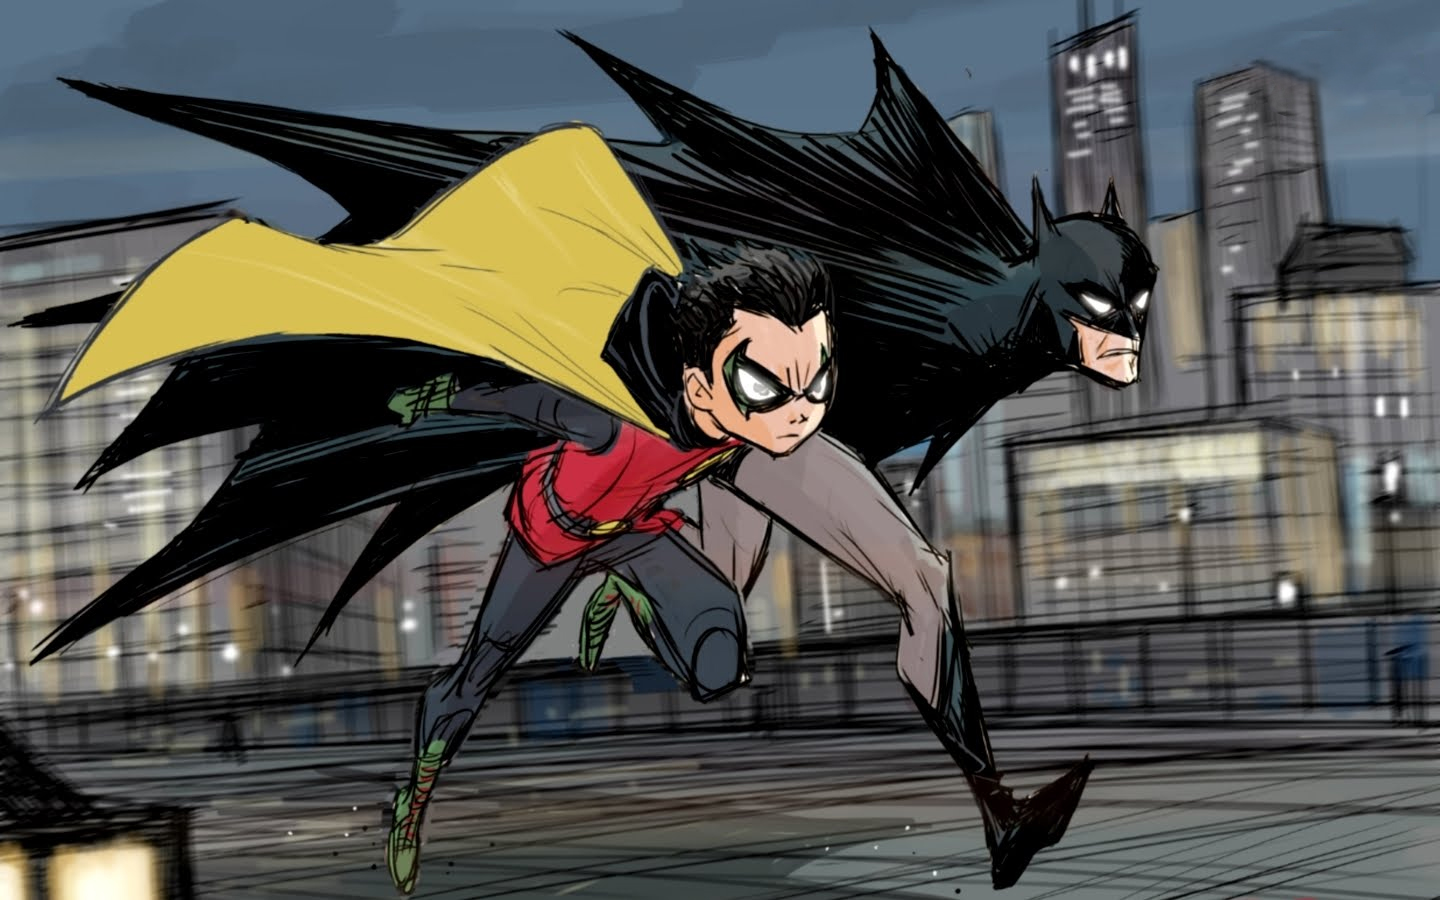 batman and robin.jpg